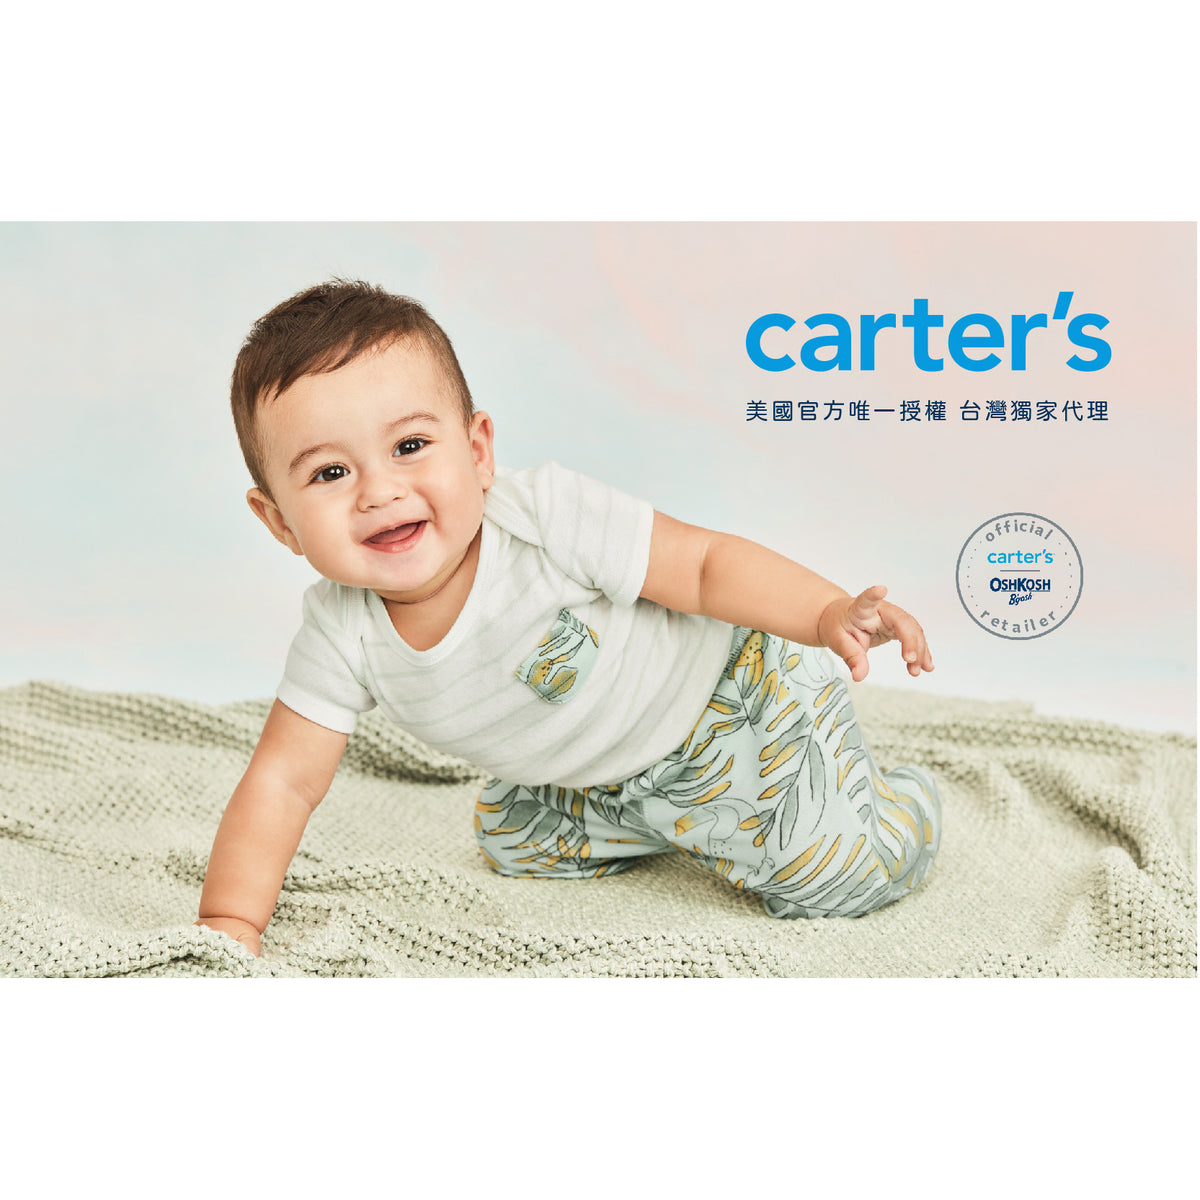 Carter's 經典藍白條紋POLO衫(6M-24M)